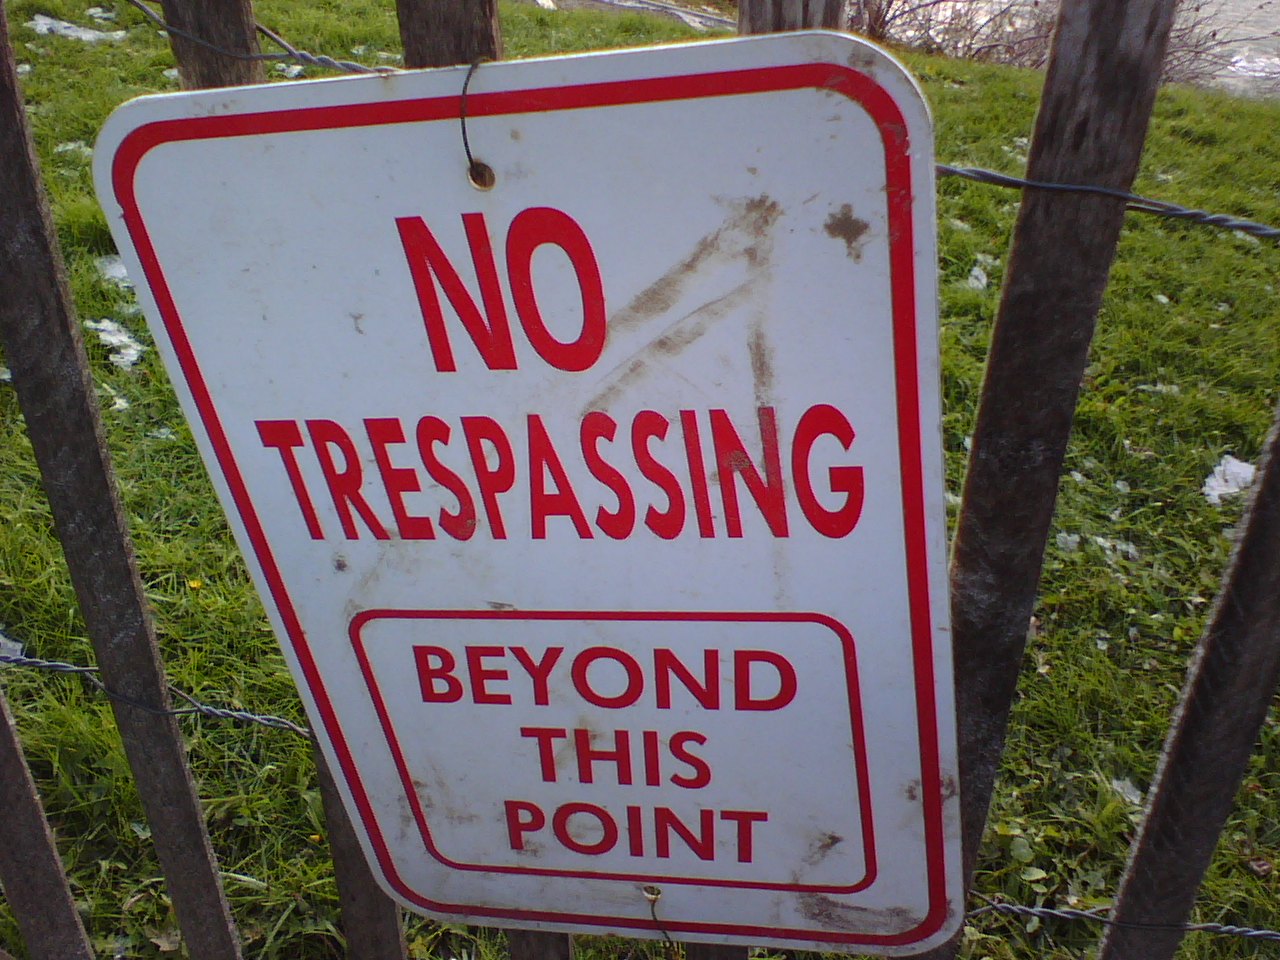 So We're Already Trespassing?